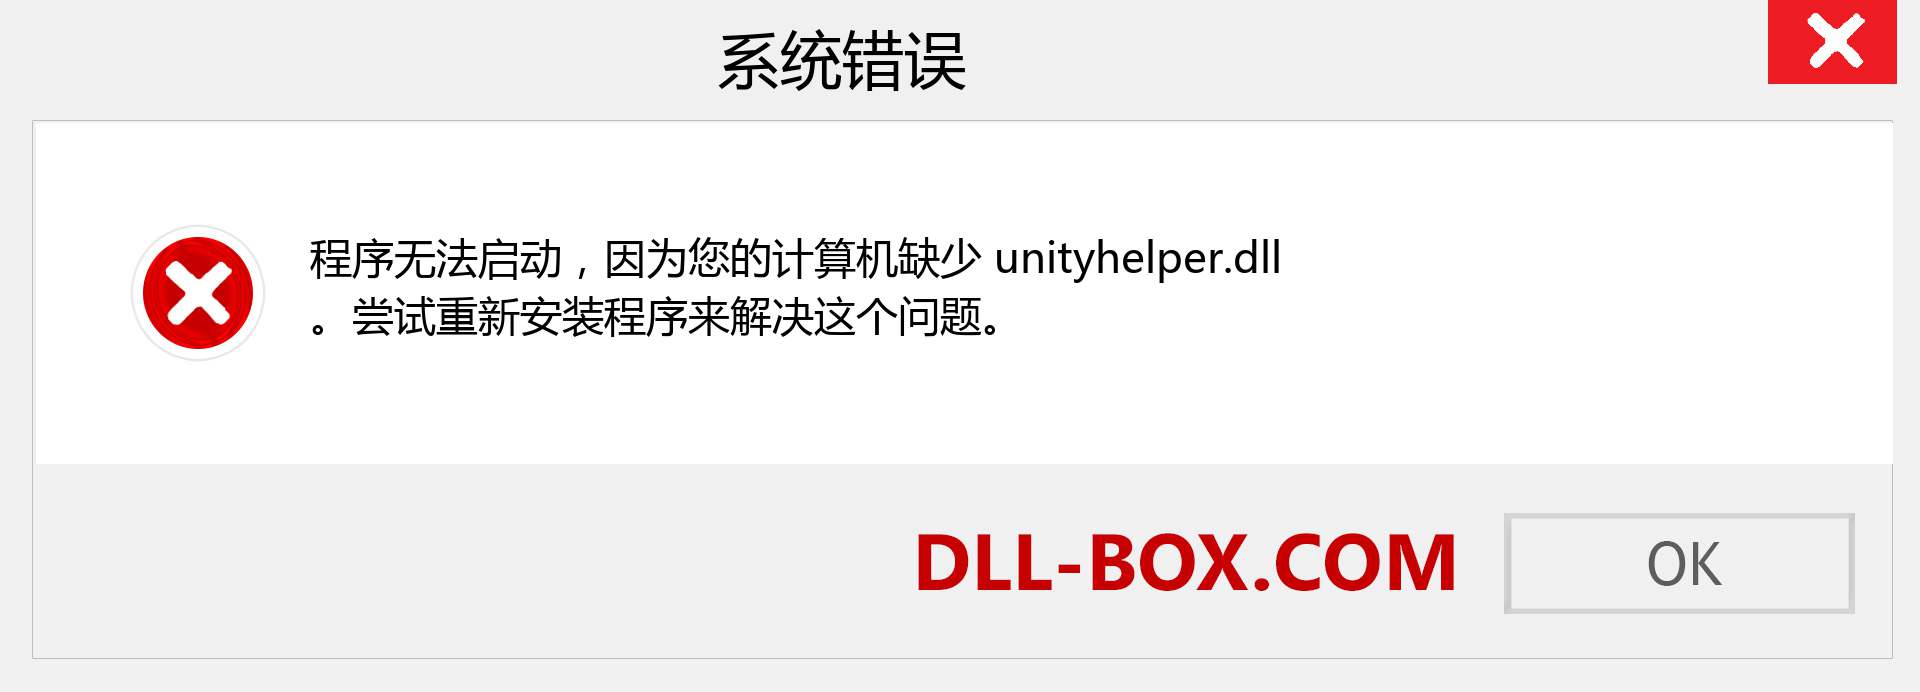 unityhelper.dll 文件丢失？。 适用于 Windows 7、8、10 的下载 - 修复 Windows、照片、图像上的 unityhelper dll 丢失错误